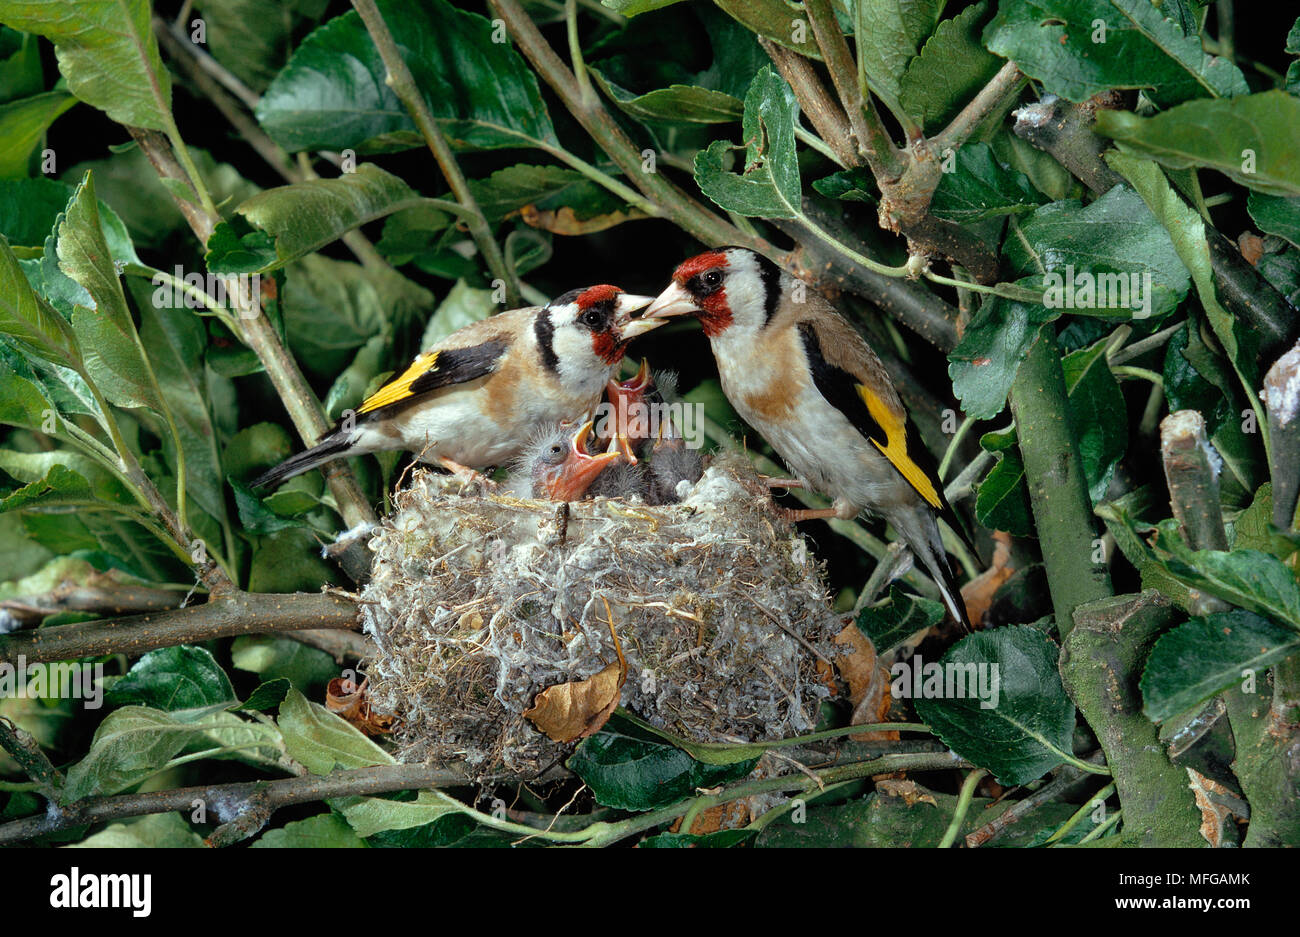 Jilgueros nidos fotografías e imágenes de alta resolución - Alamy